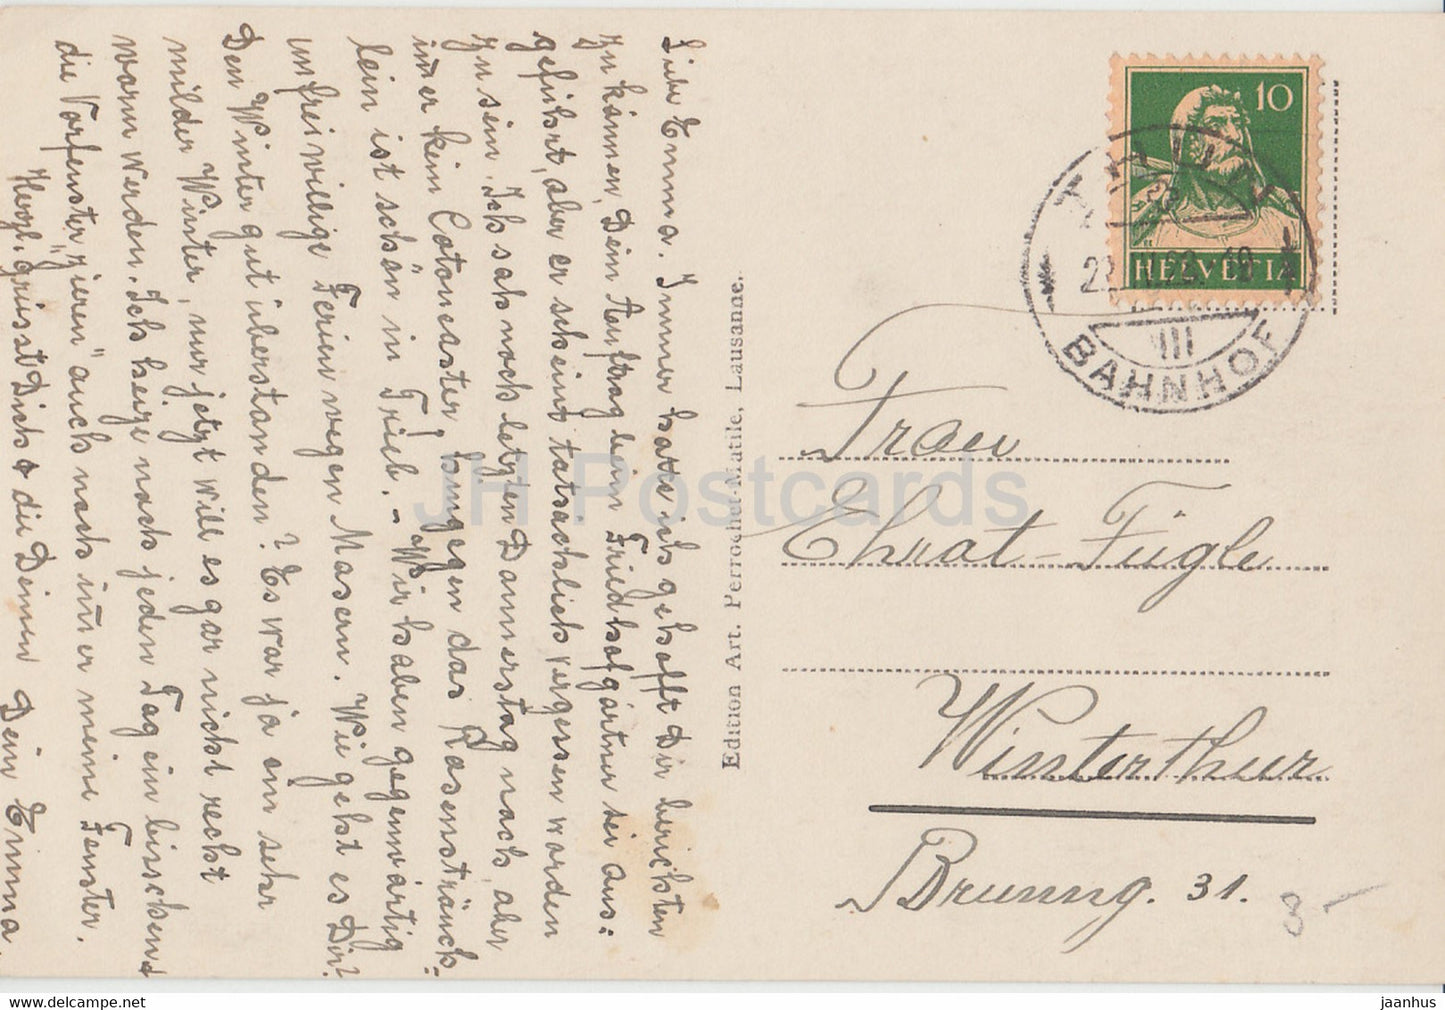 Schwan - Vögel - Perrochet 652 - alte Postkarte - Schweiz - 1928 - gebraucht